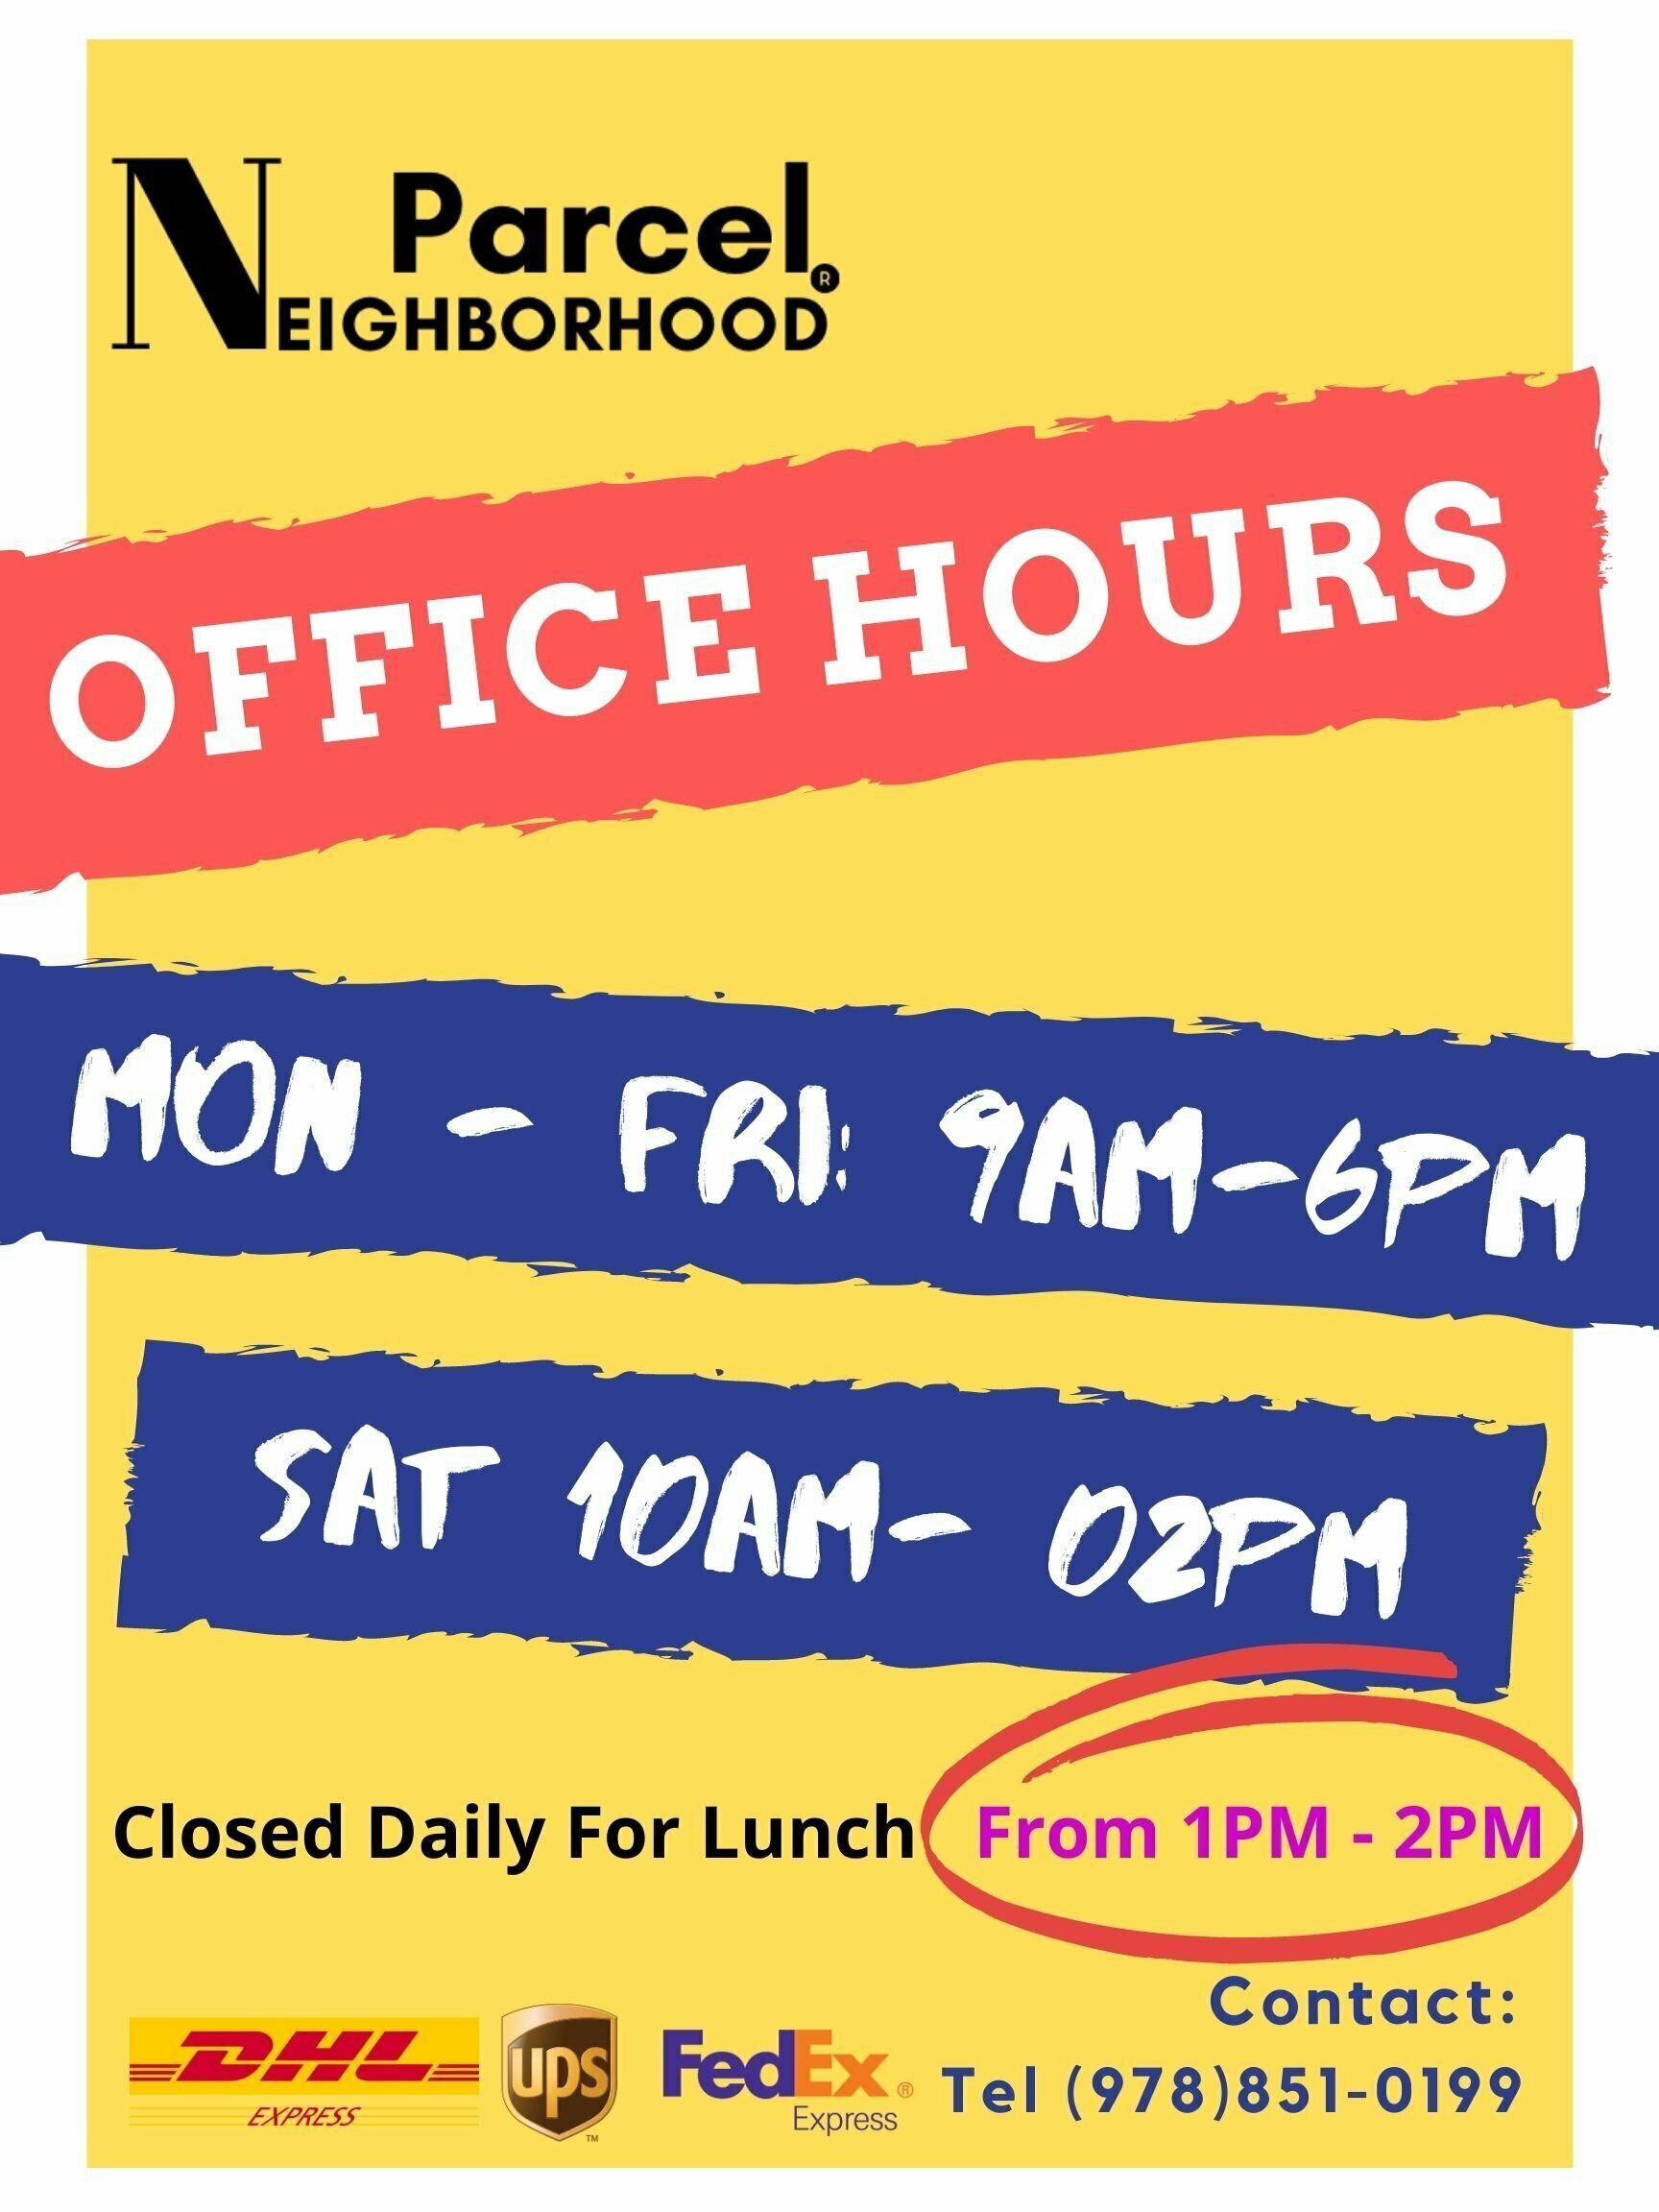 Neighborhood Parcel Office Hours